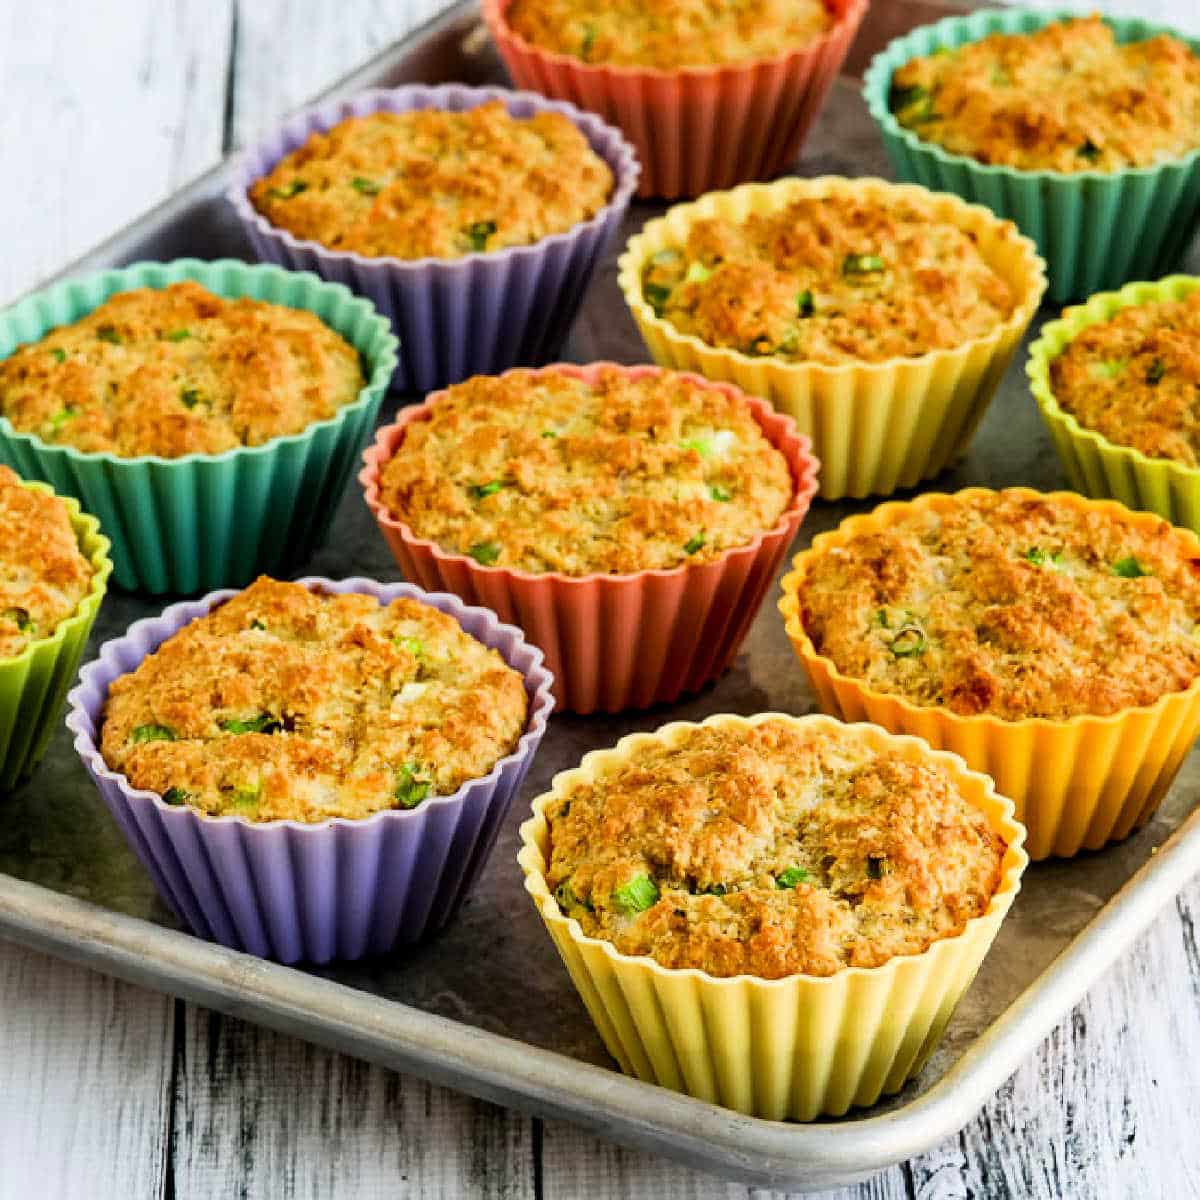 https://kalynskitchen.com/wp-content/uploads/2019/04/1200-low-carb-high-fiber-savory-muffins.jpg